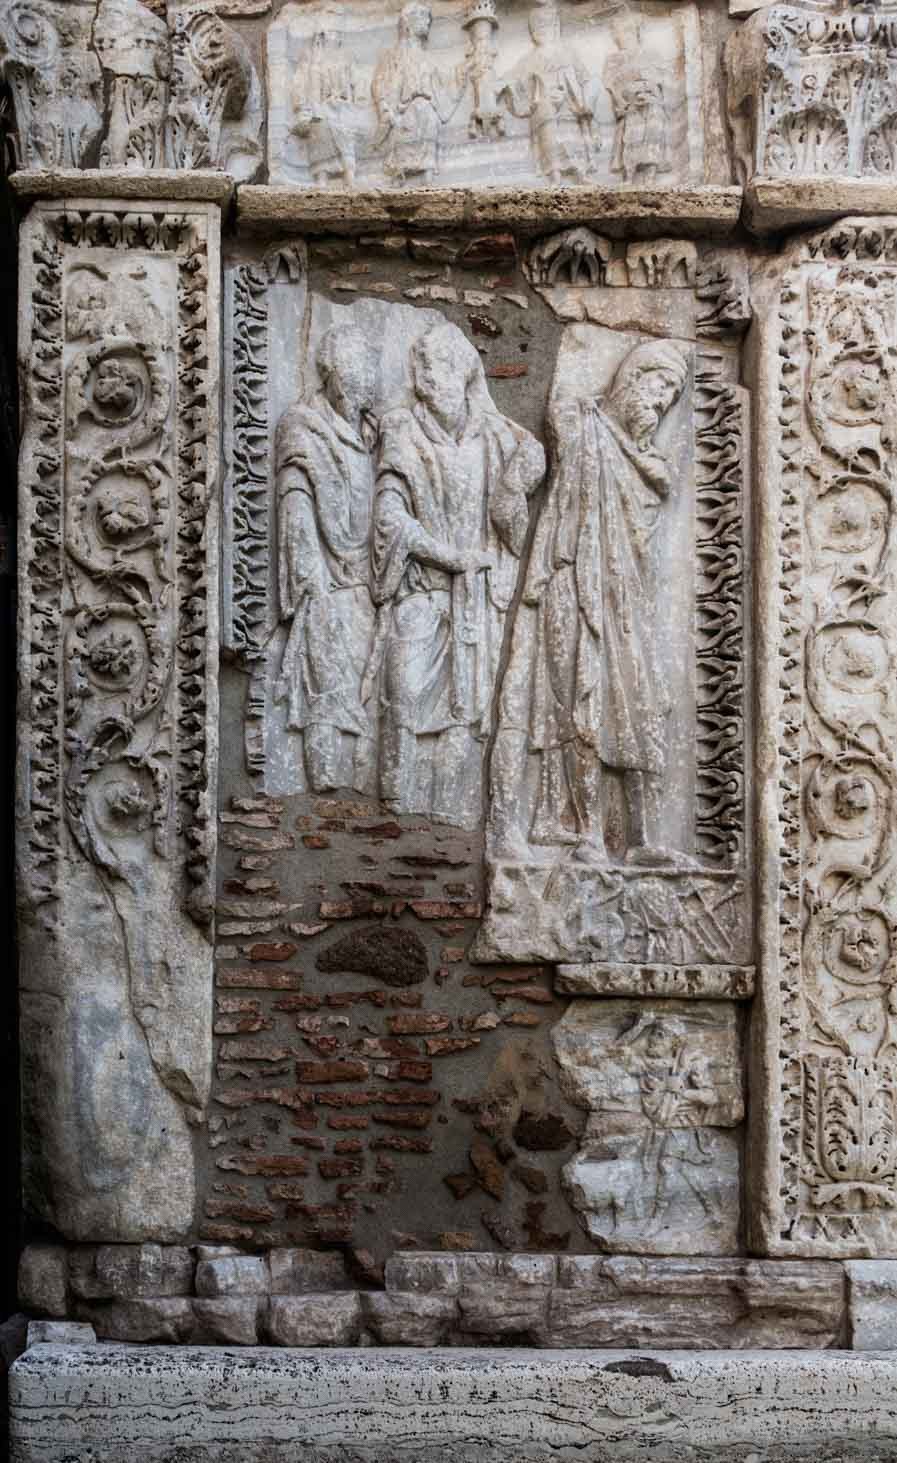 Arch of the Silversmiths (Arco degli Argentari), soldier and a prisoner – scene commemorating the conquests of Emperor Septimius Severus